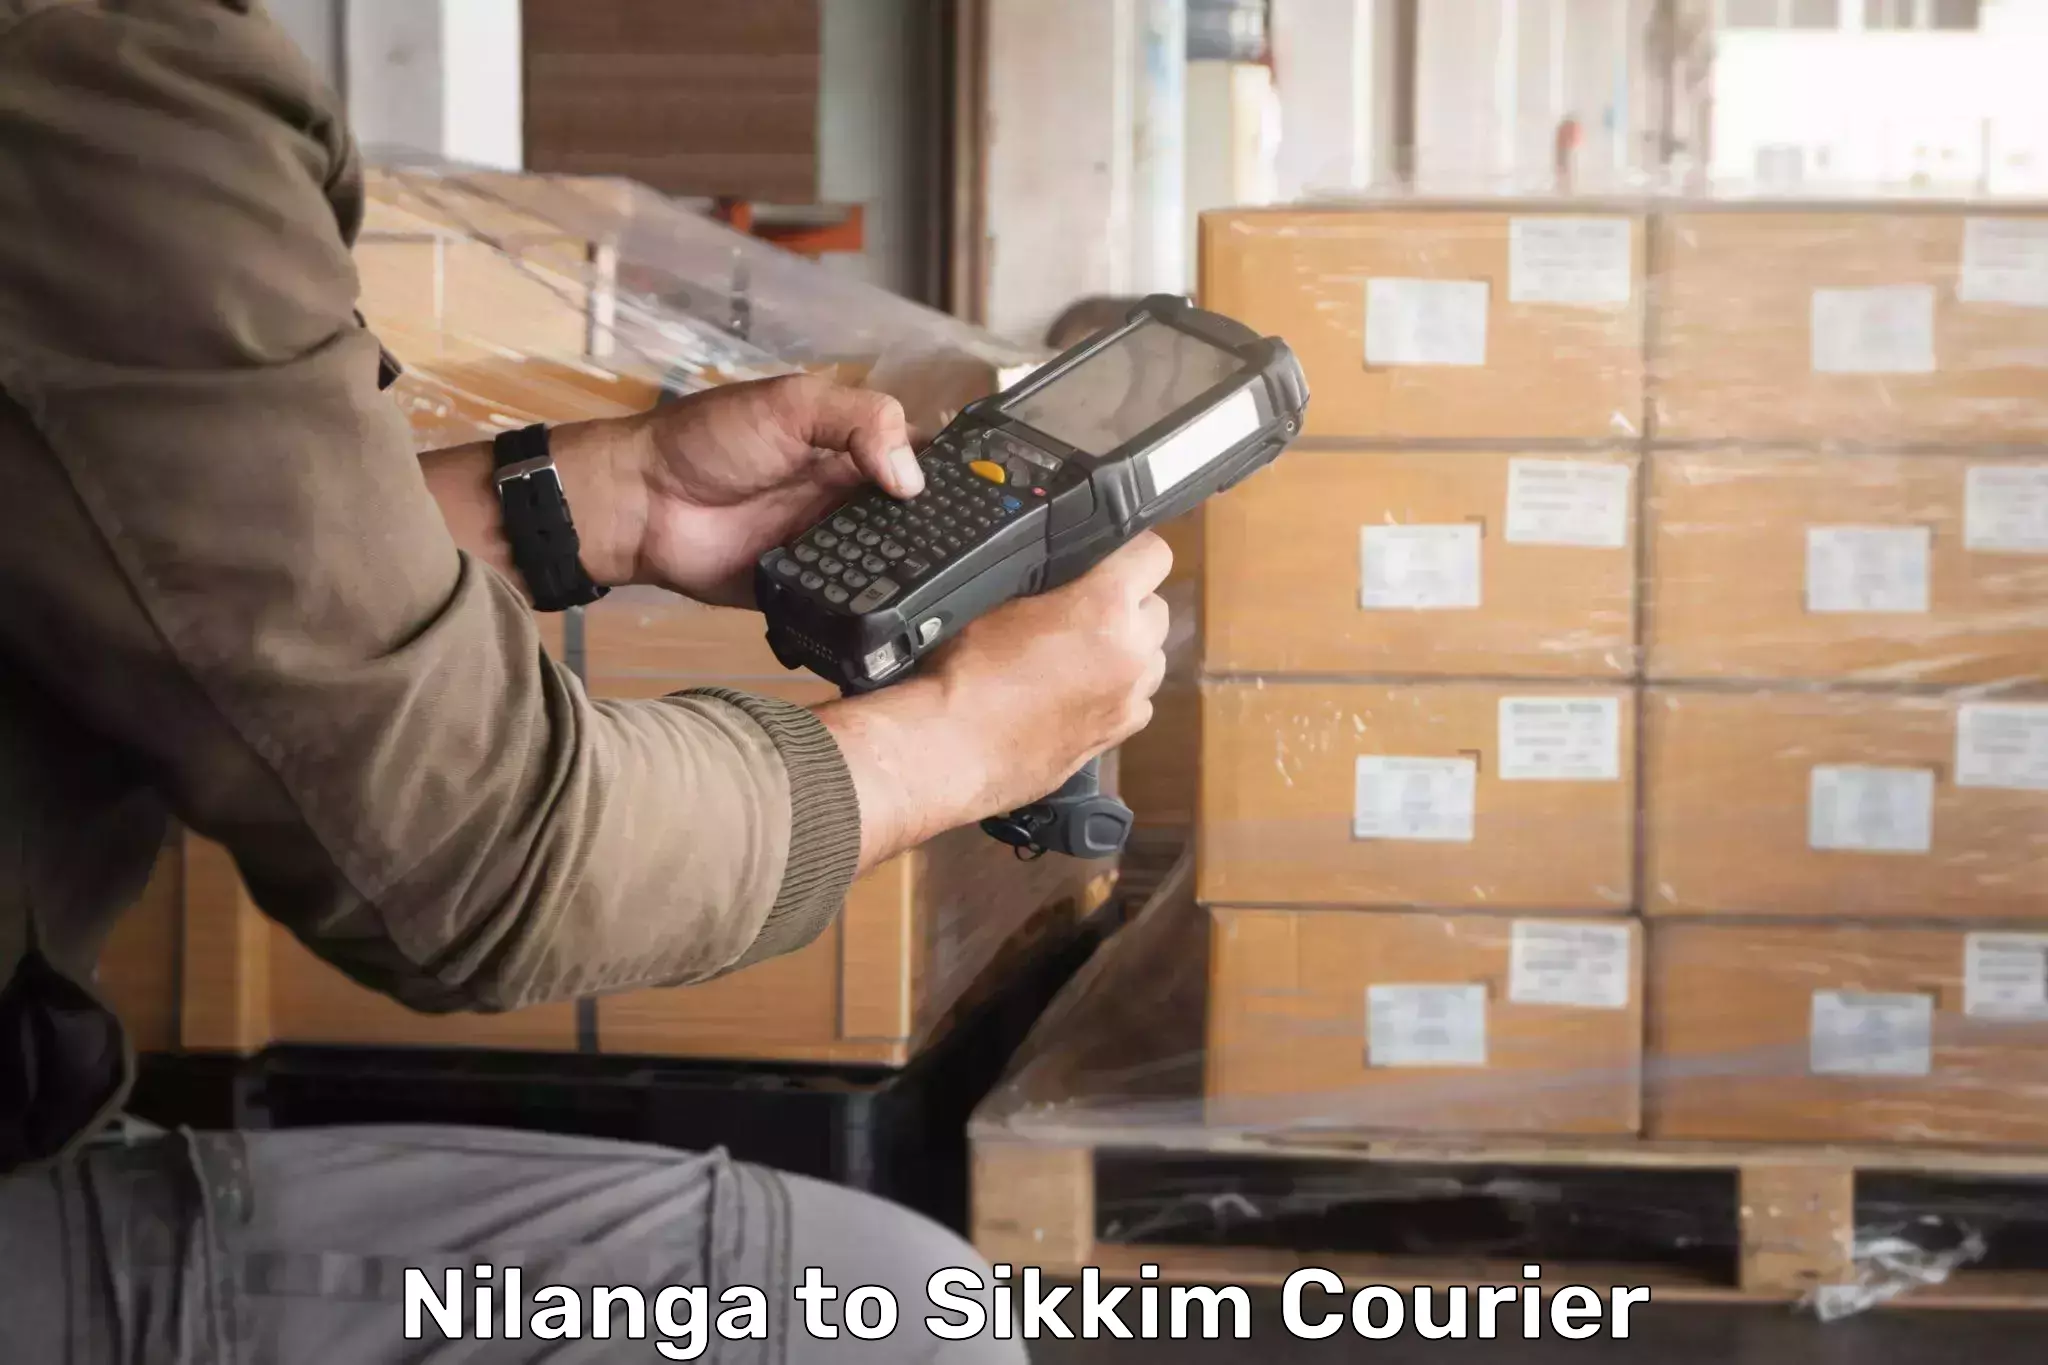 Advanced tracking systems Nilanga to Pelling